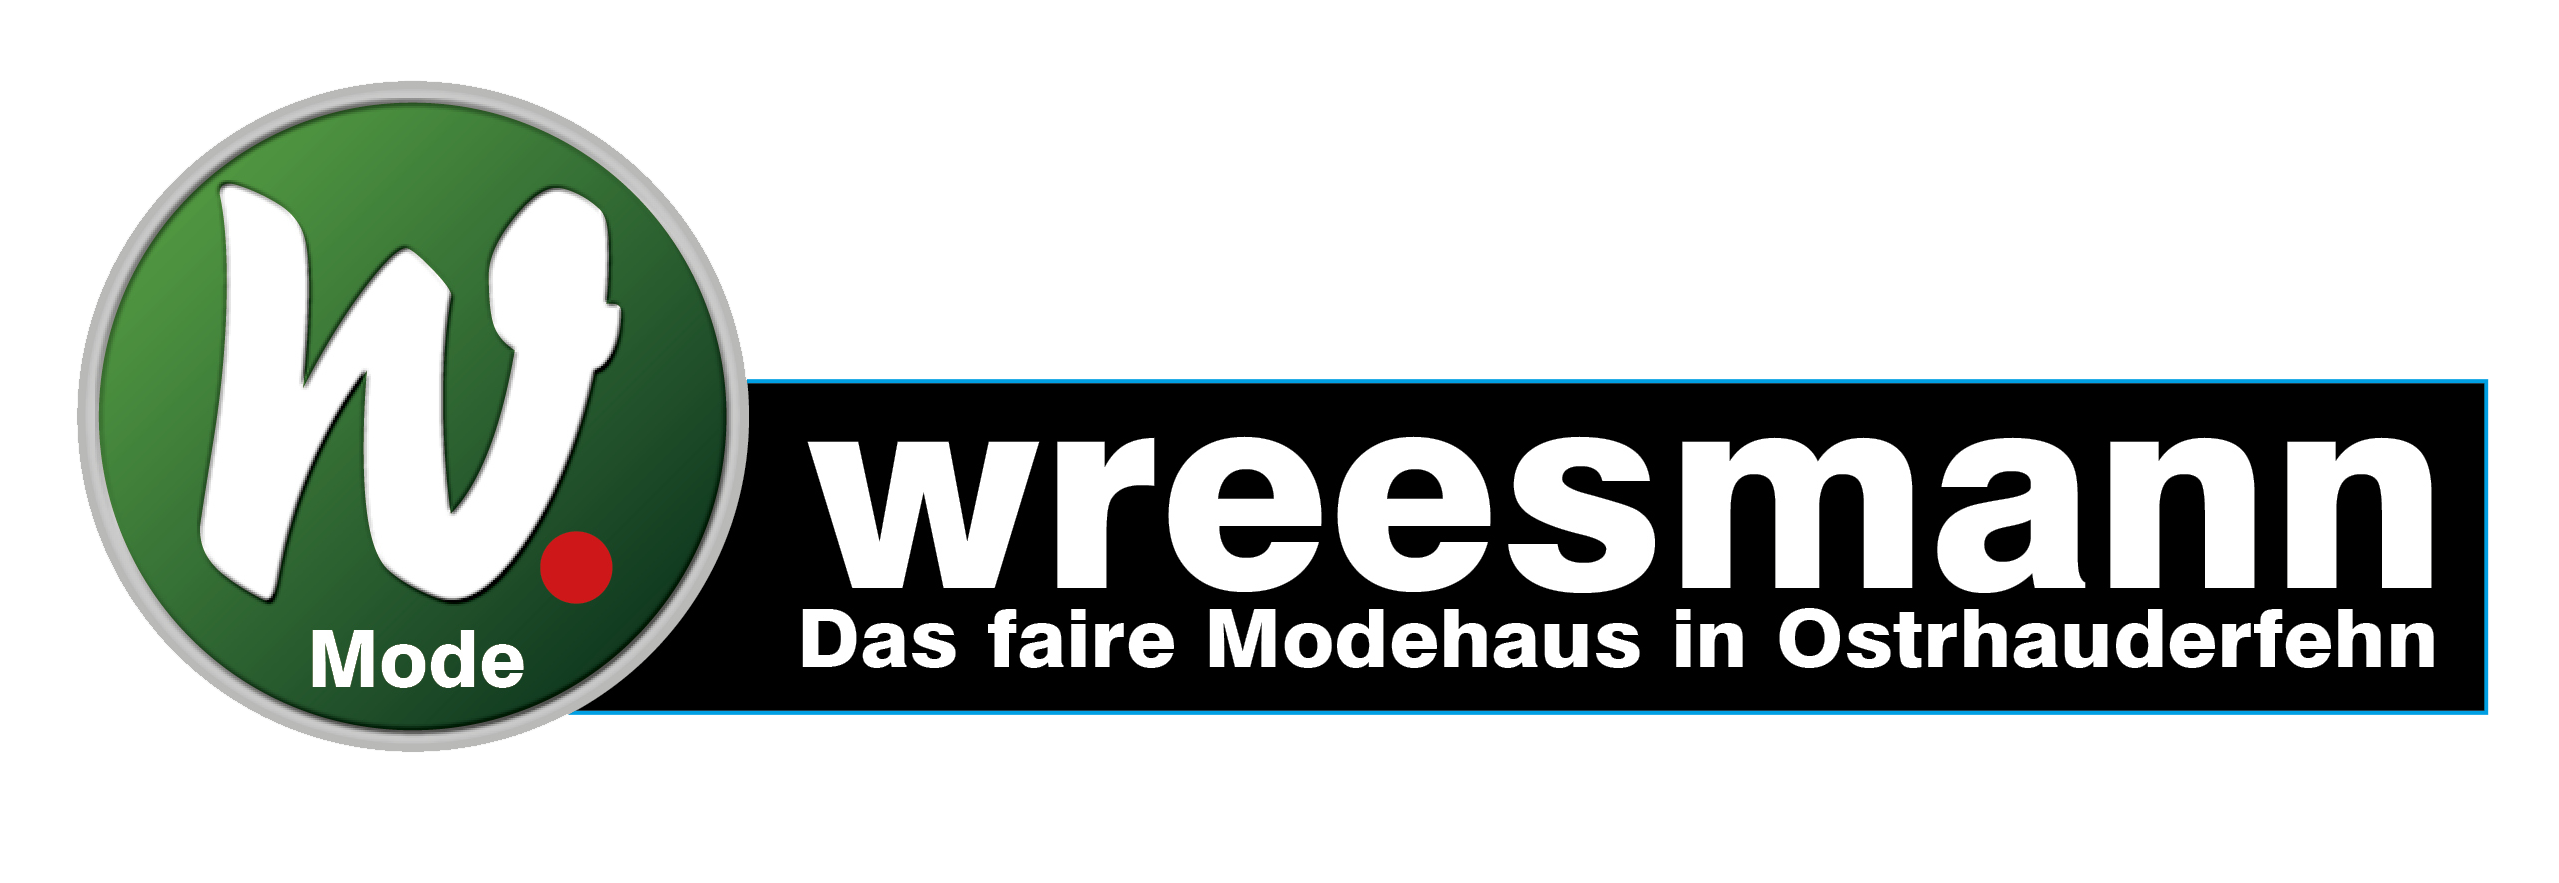 TSV Ostrhauderfehn Logo 2